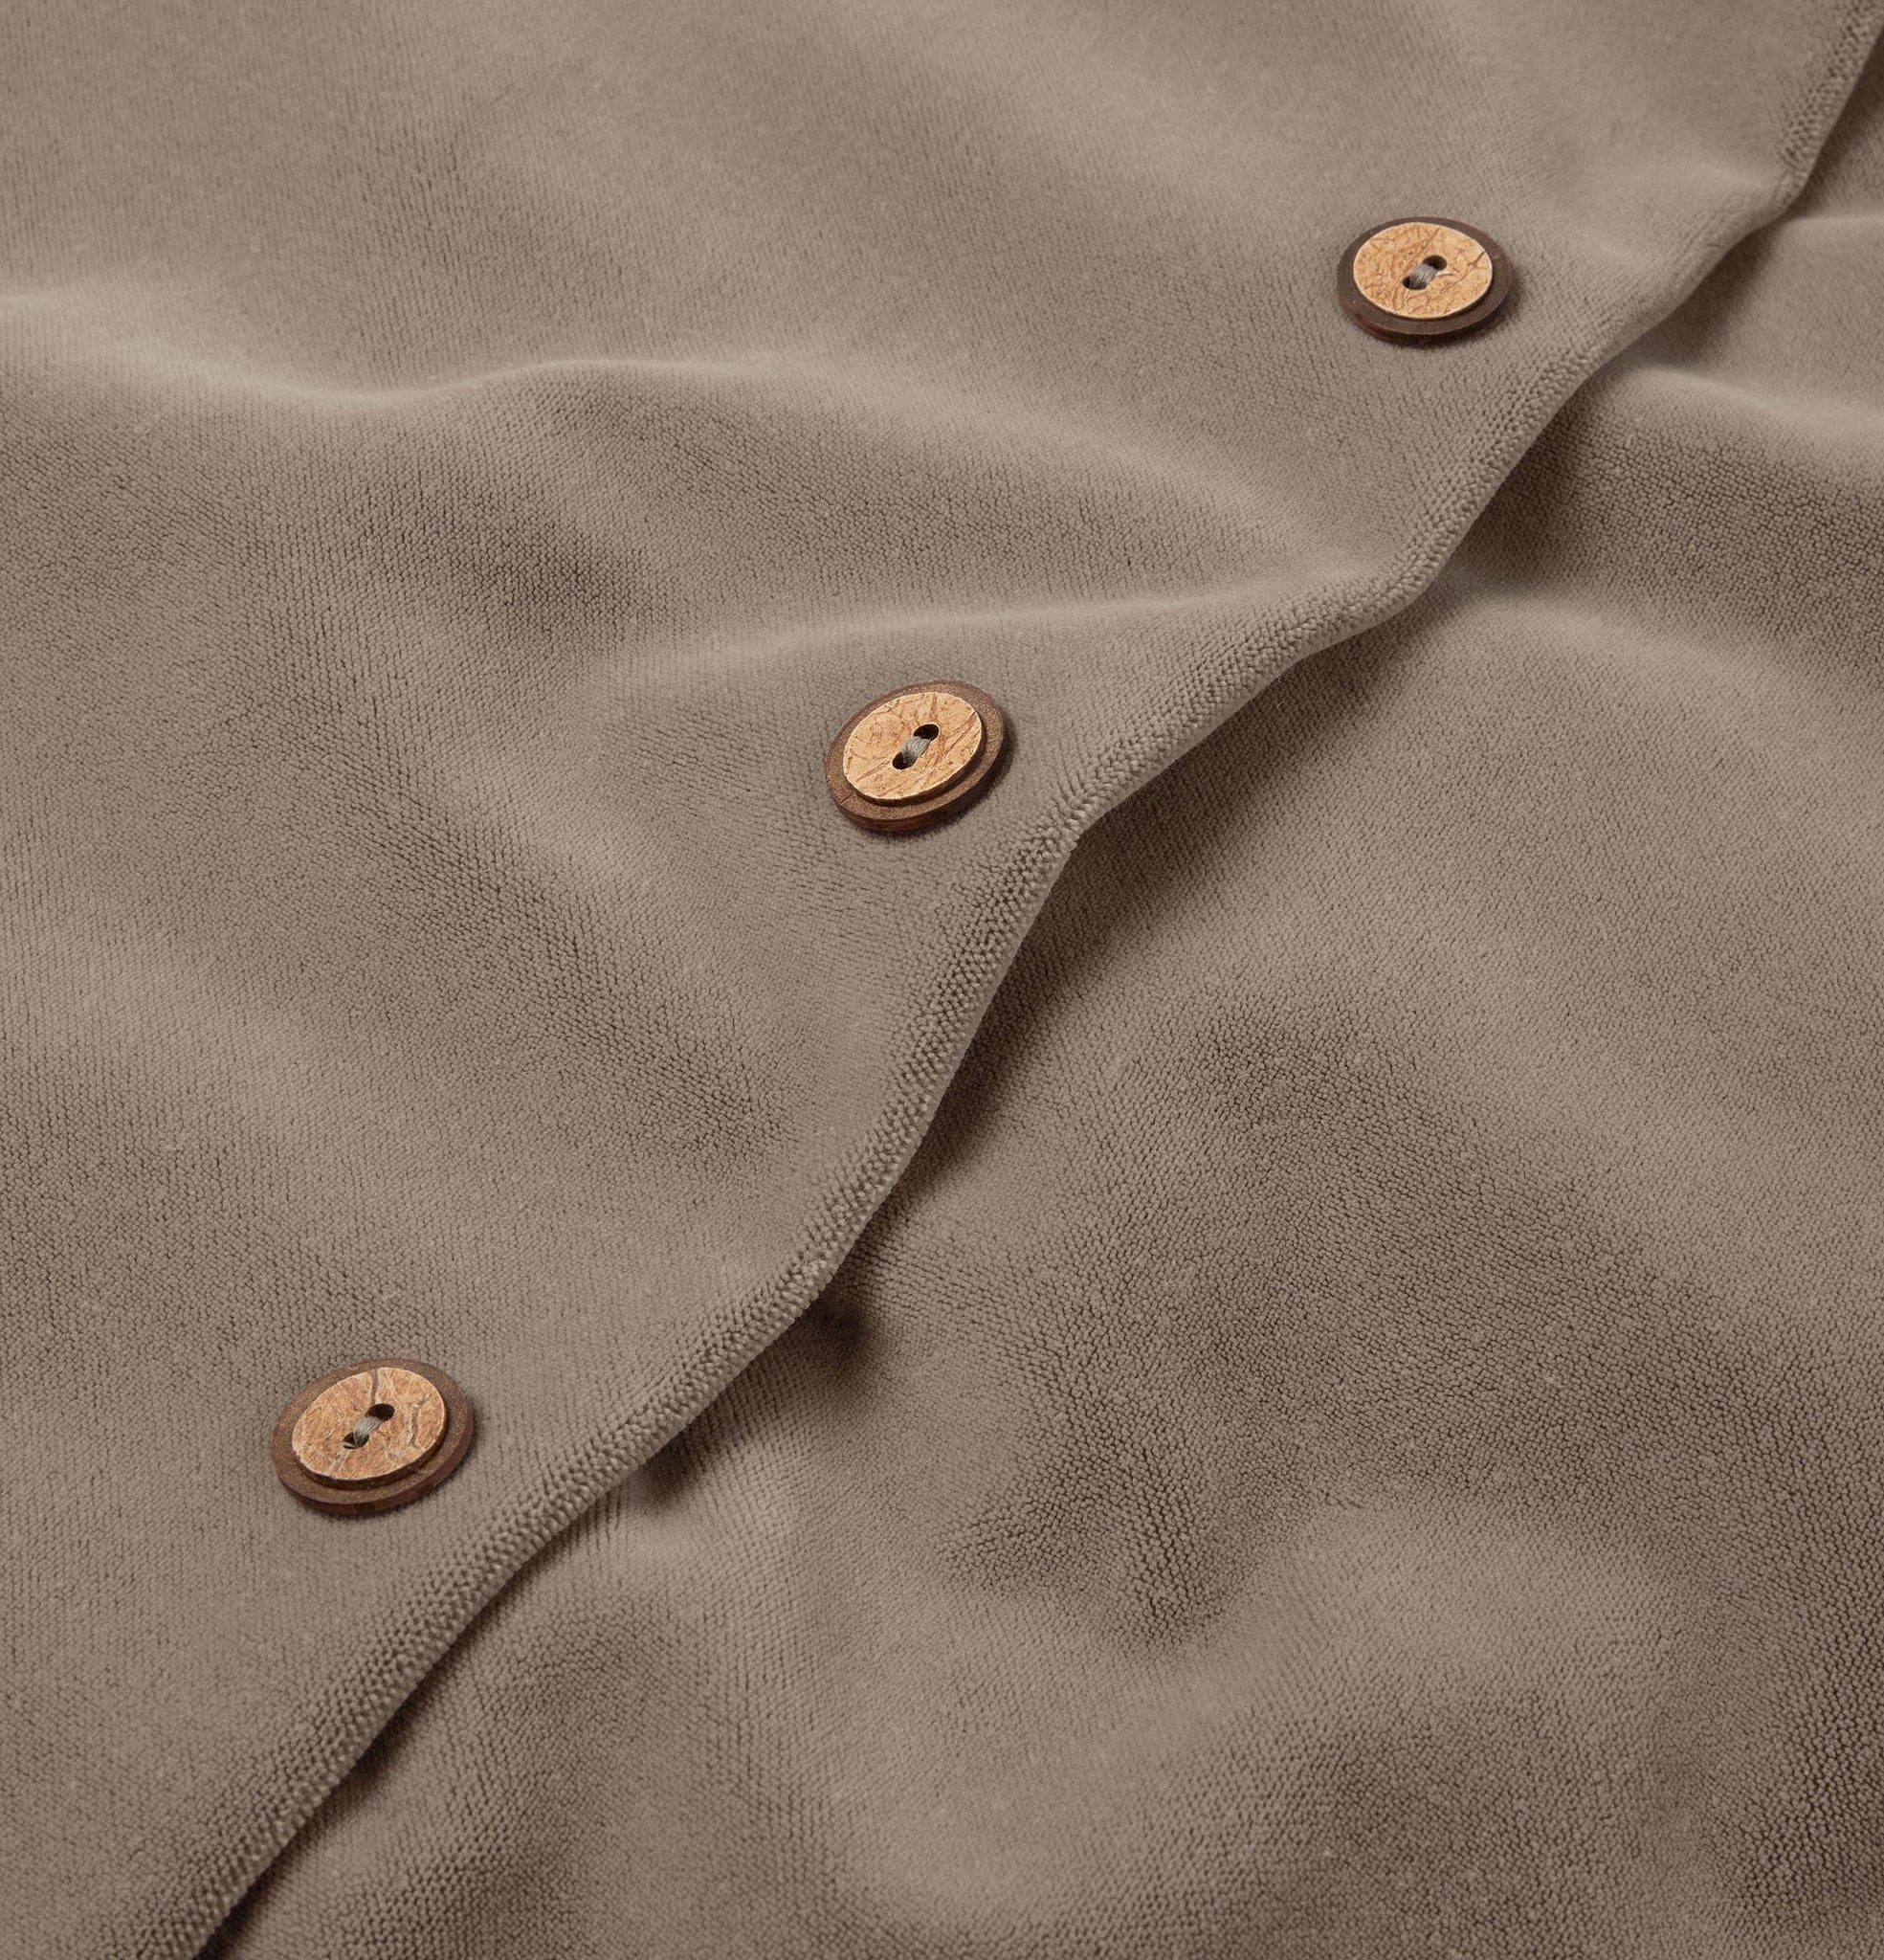 Button detail of harvest taupe velvet cushion